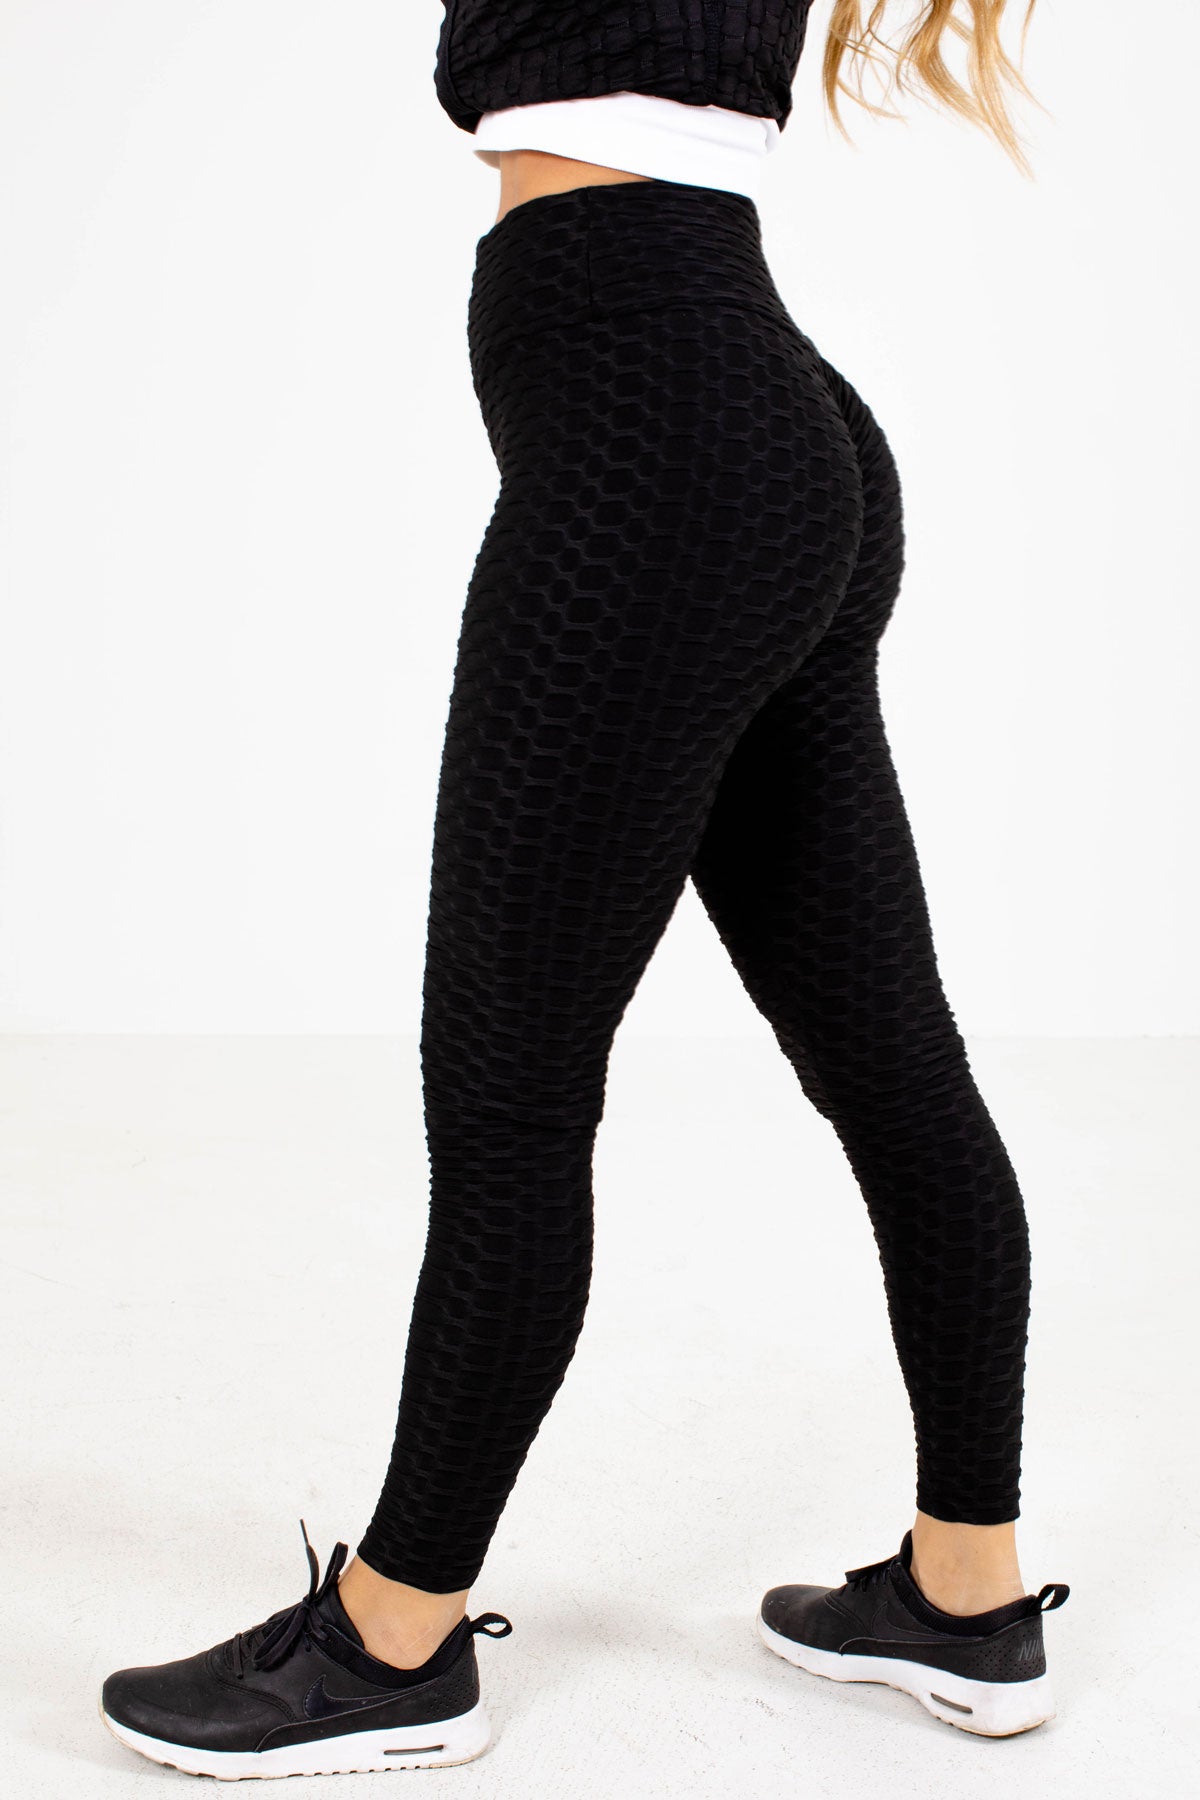 Women's Textured Leggings in Black